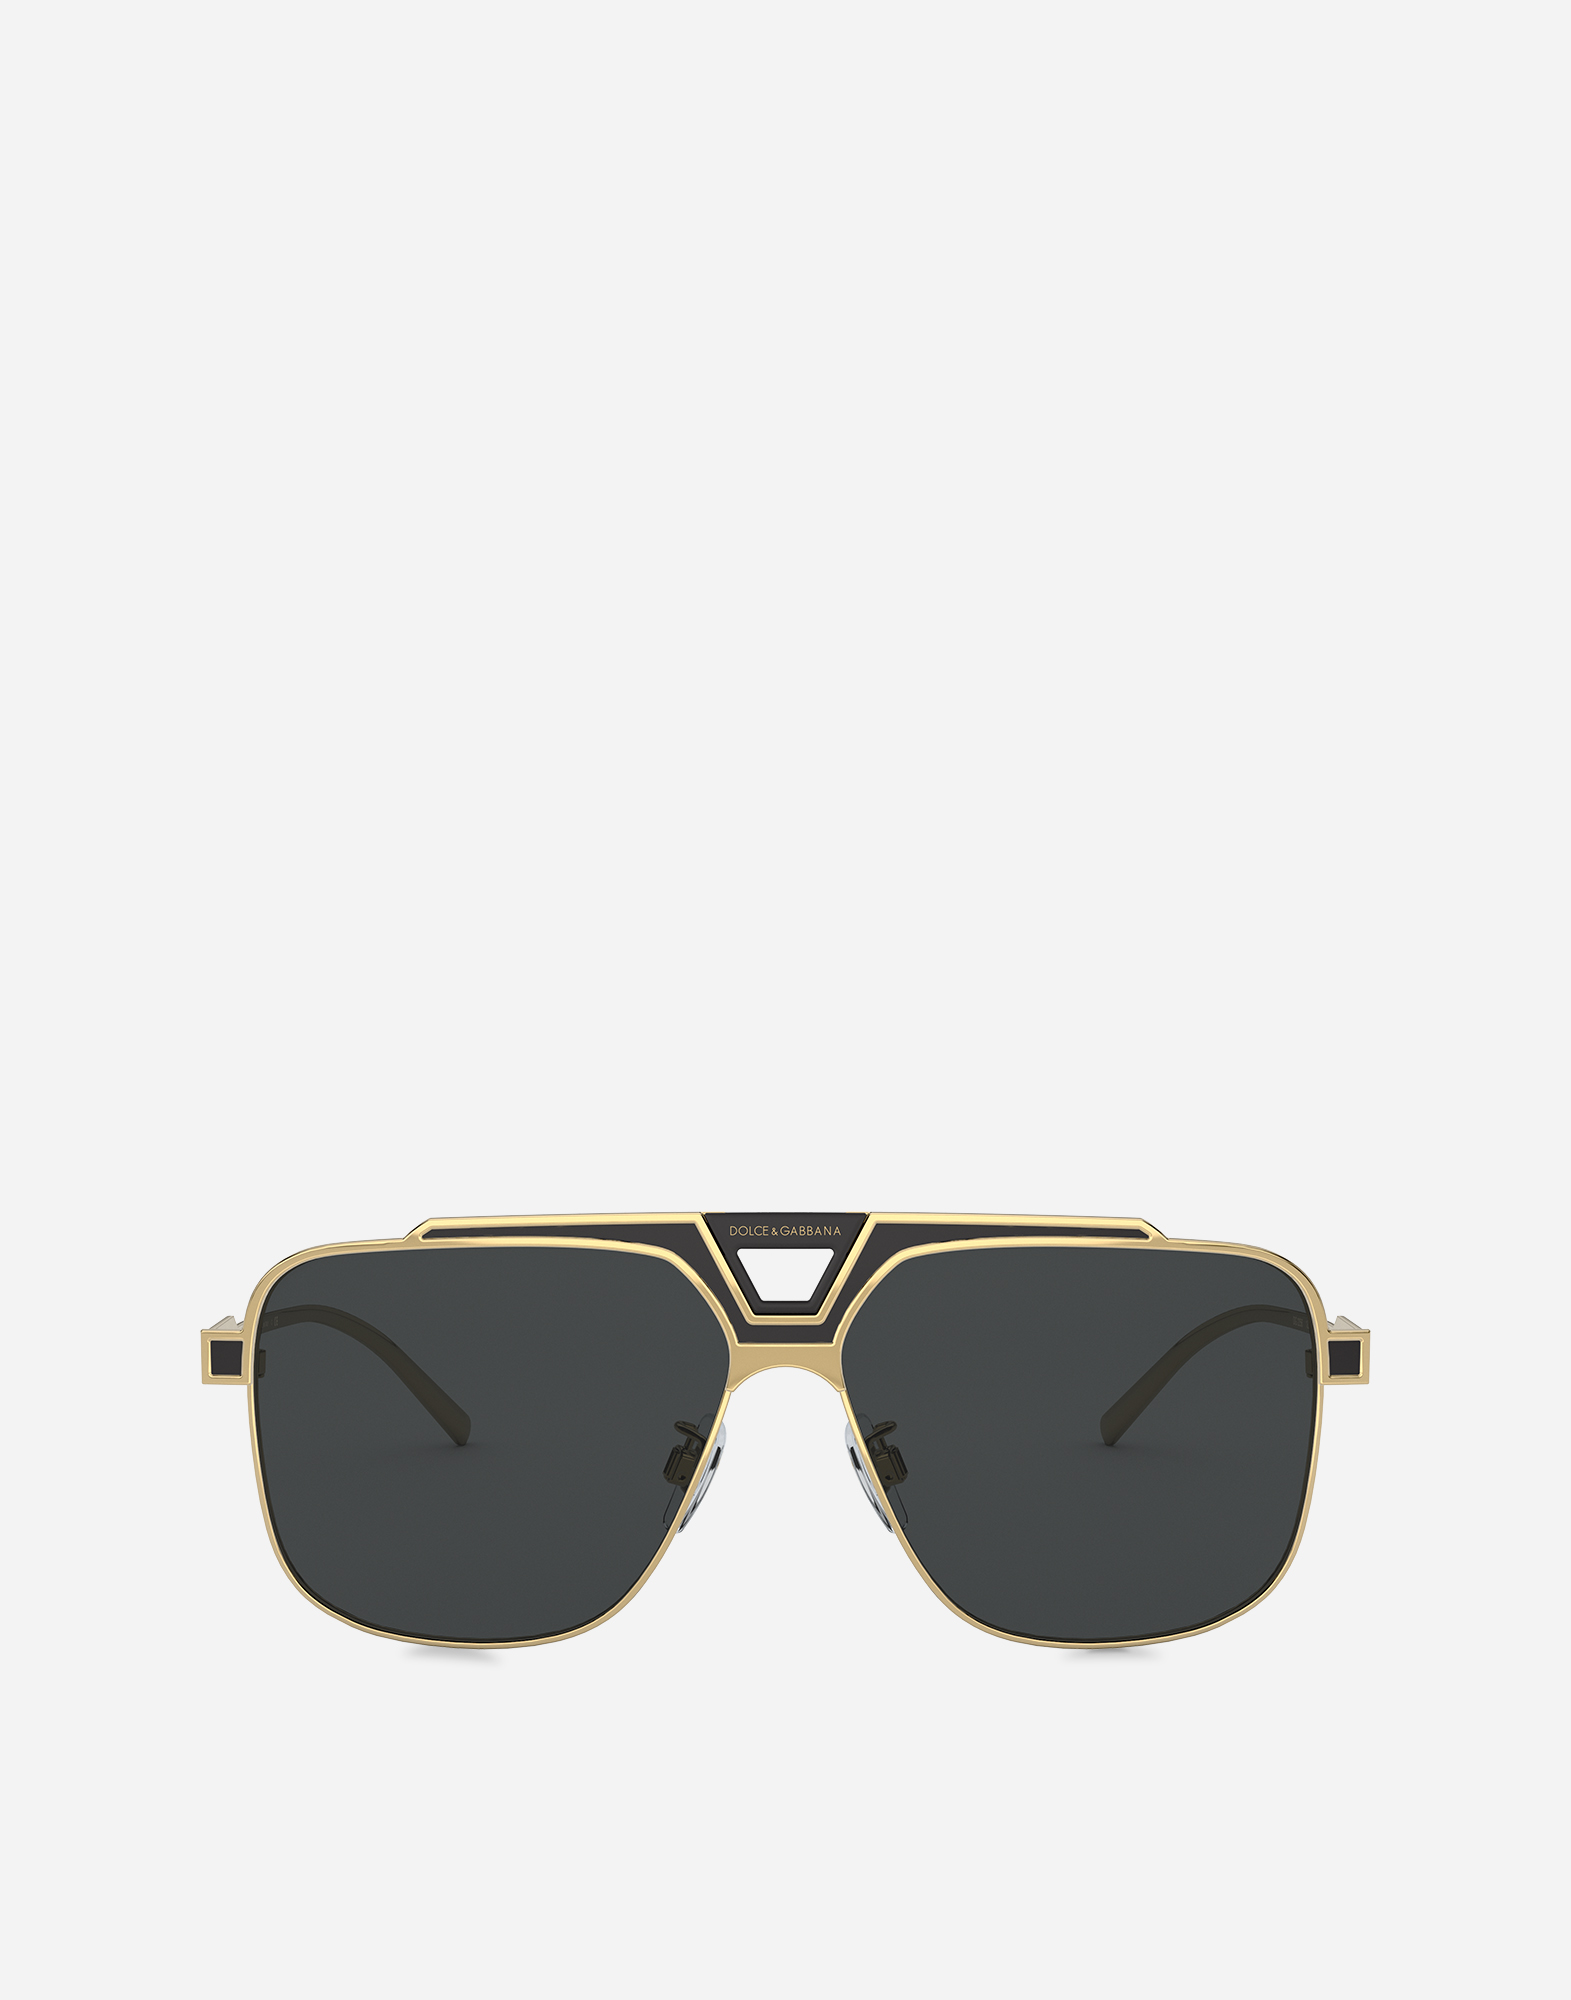 dolce and gabbana sunglasses men's